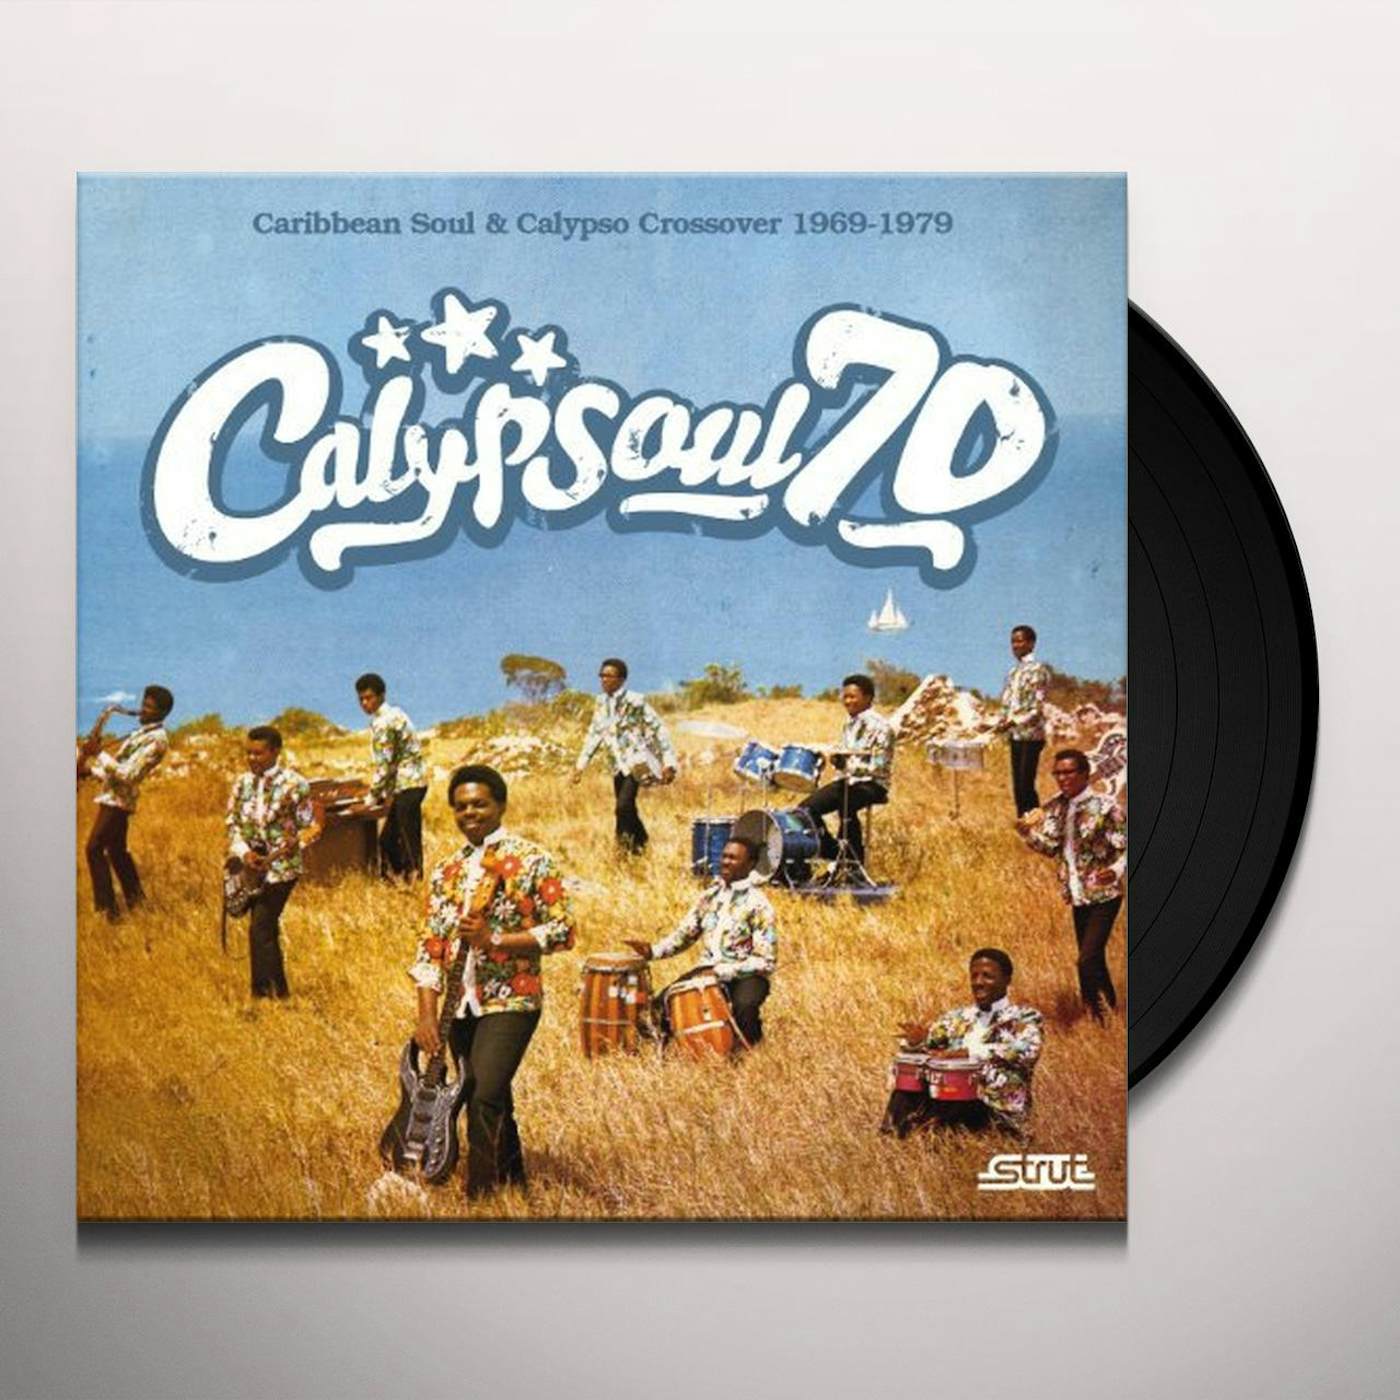 CALYPSOUL 70: CARIBBEAN SOUL & CALYPSOUL / VARIOUS Vinyl Record